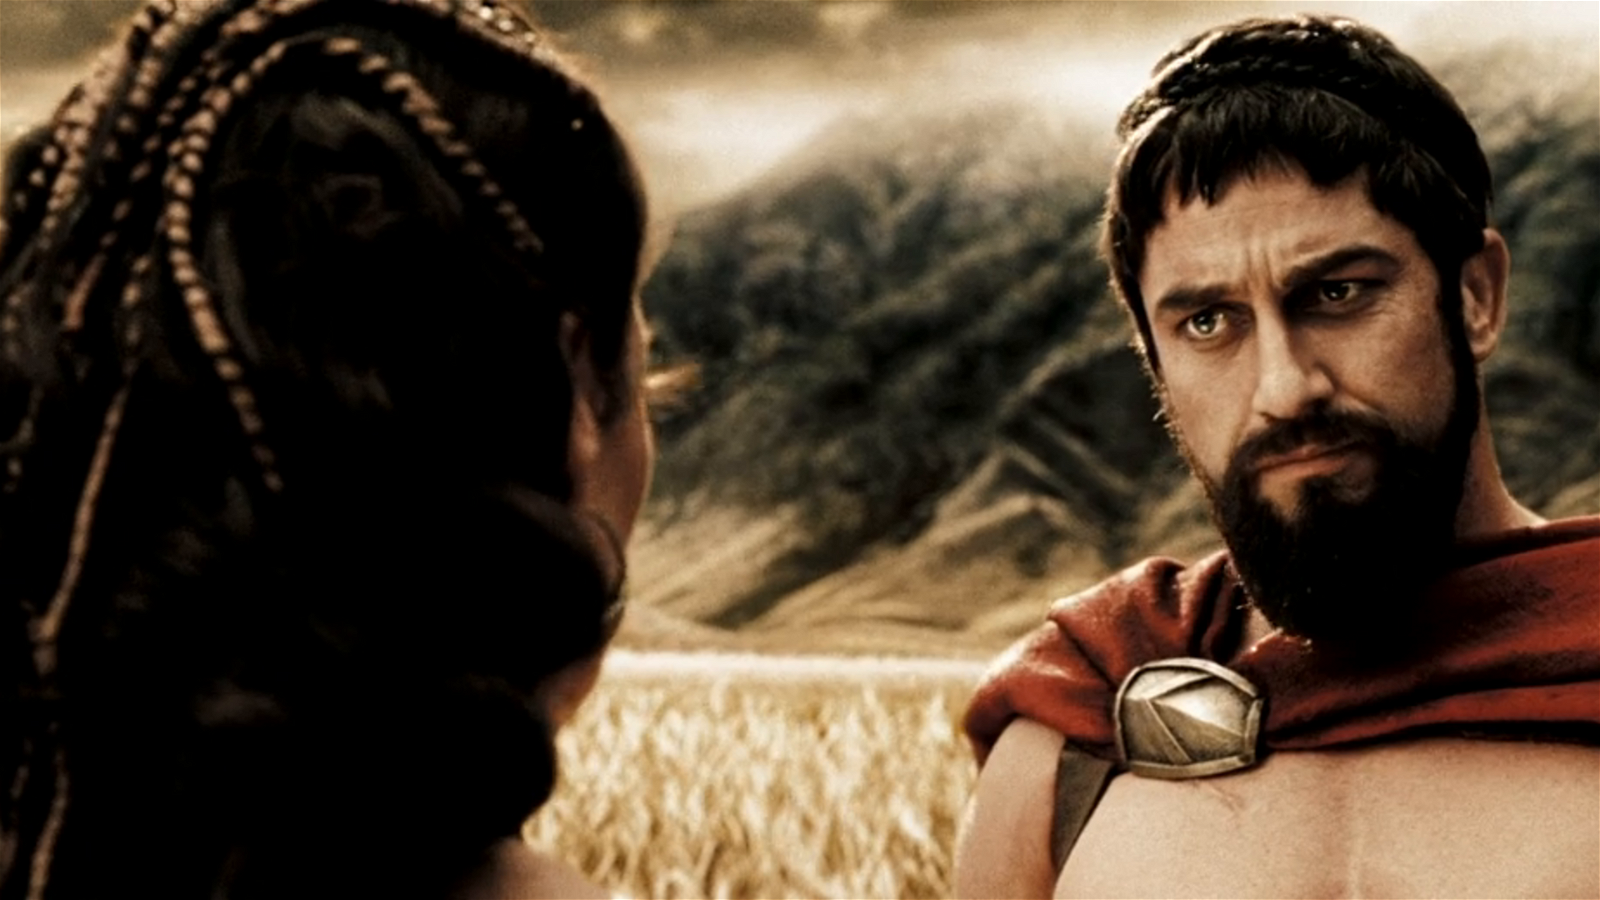 Gerard Butler as King Leonidas in 300